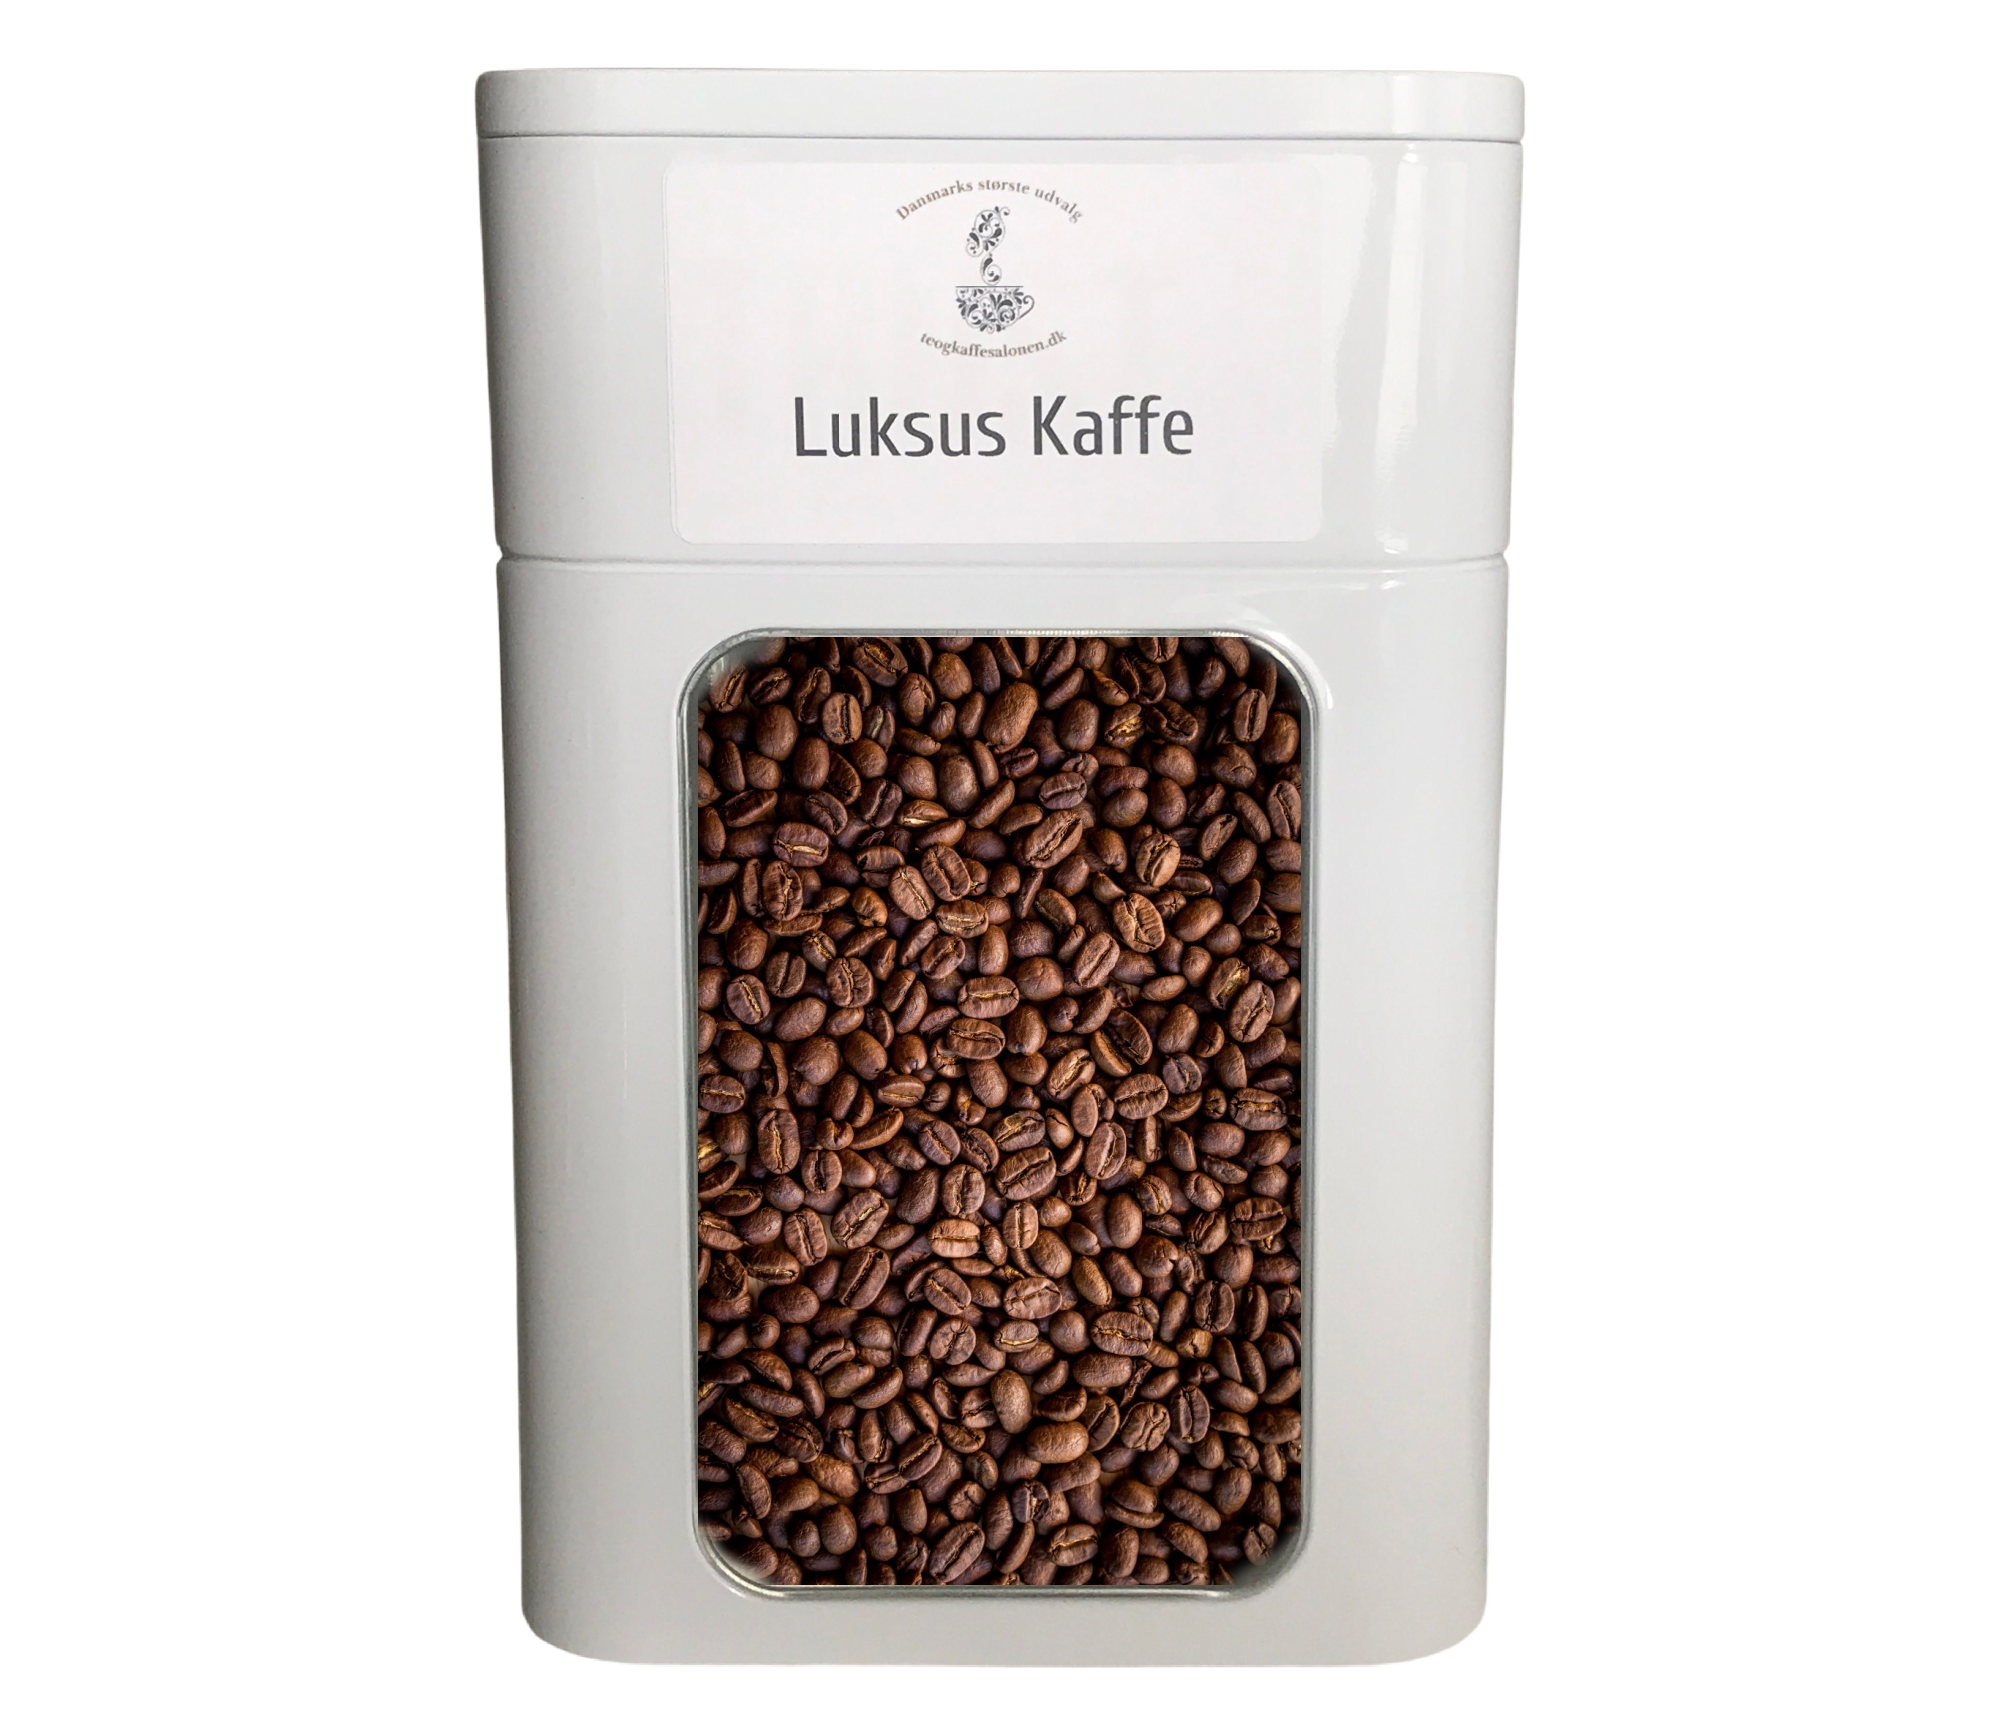 Se Dåse inkl 1 kg gourmet kaffebønner (hvid metal med vindue) hos Teogkaffesalonen.dk